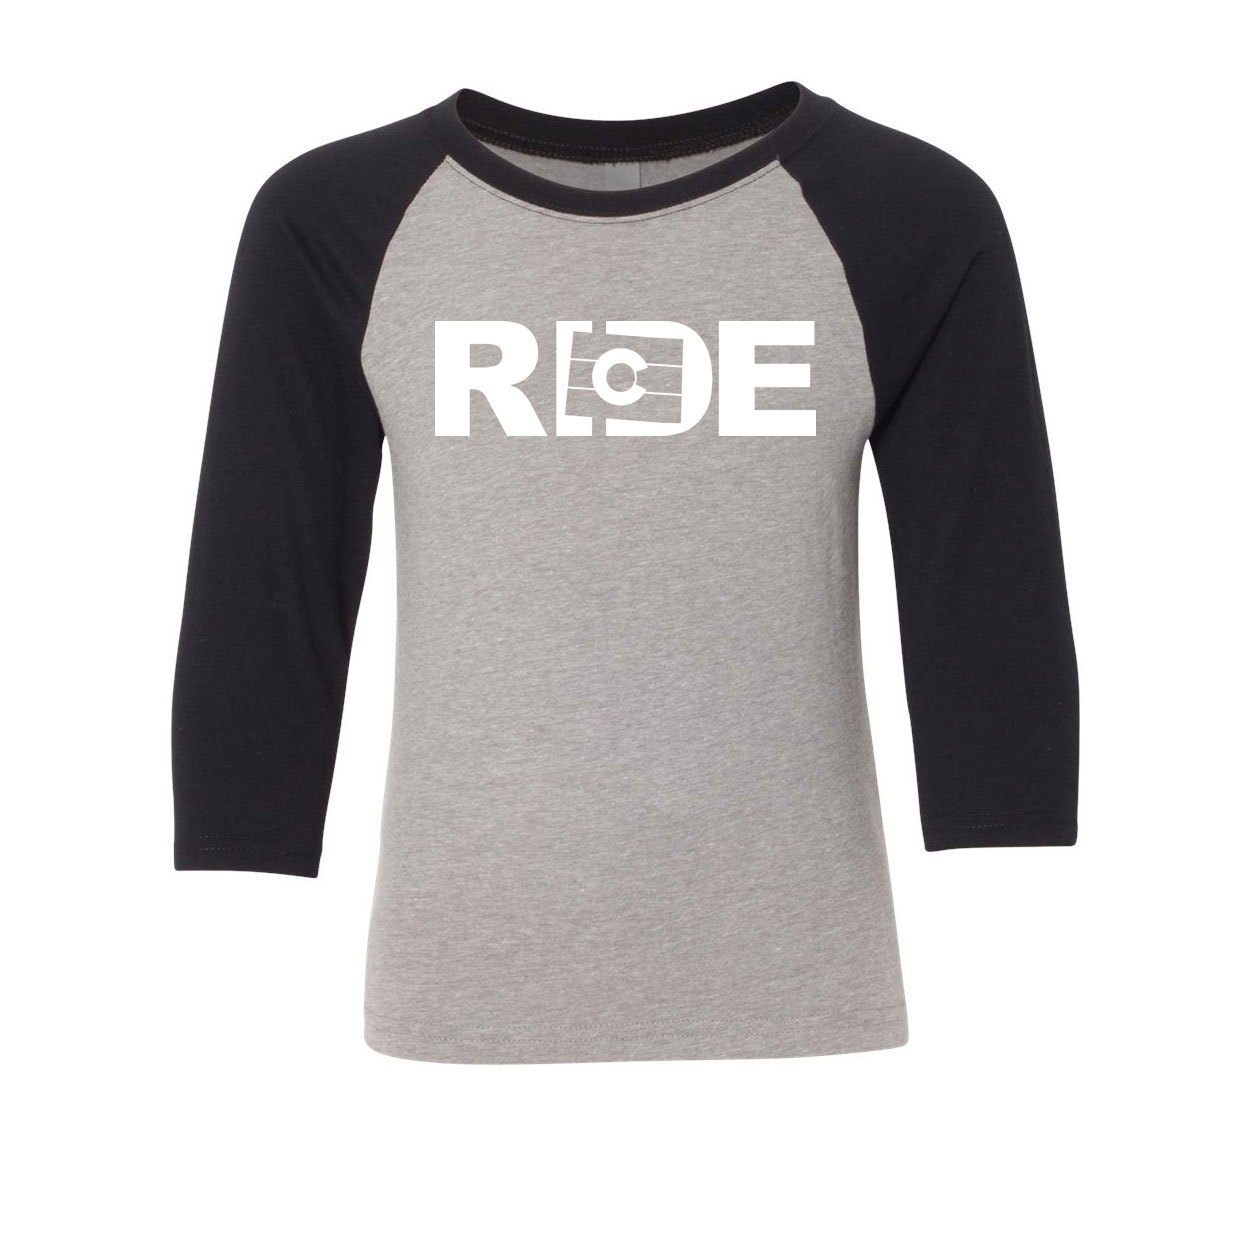 Ride Colorado Classic Youth Premium Raglan Shirt Gray/Black (White Logo)